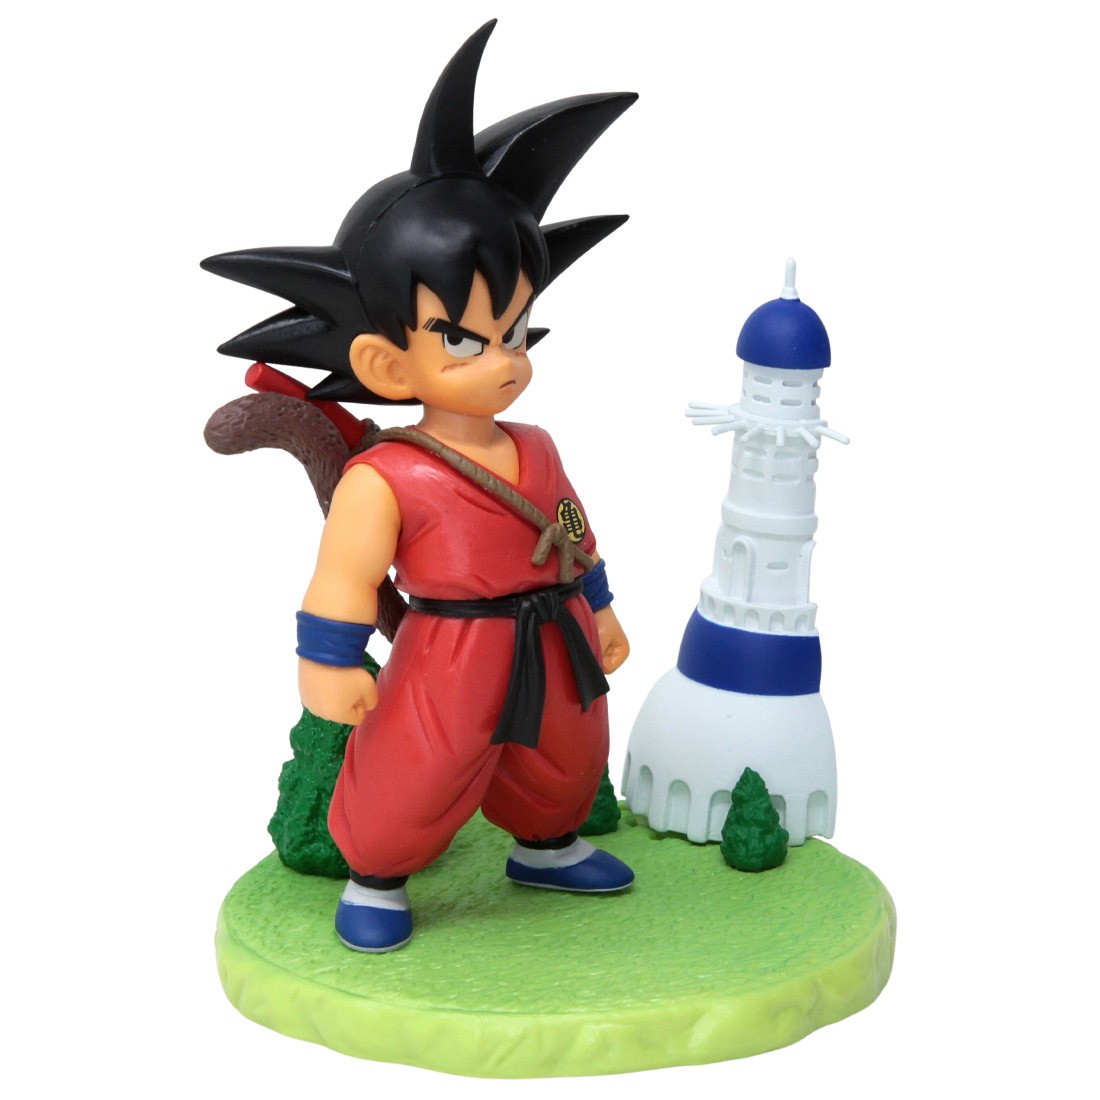 Figurine - Son Goku - Dragon Ball Z - History Box vol.1